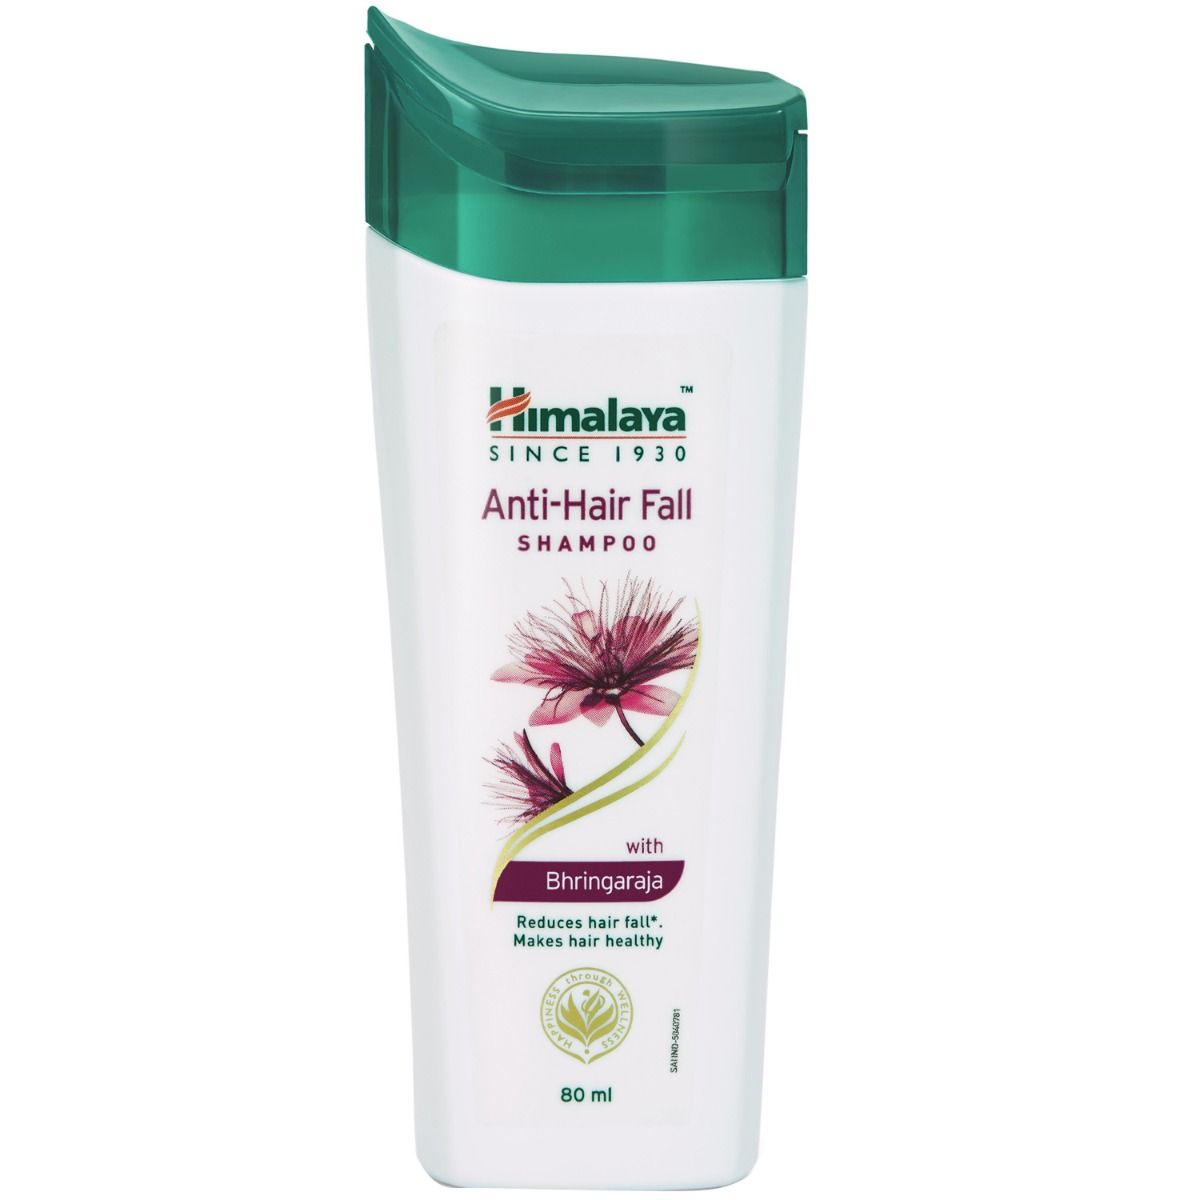 Himalaya Anti-Hairfall Shampoo, 80 ml, Pack of 1 